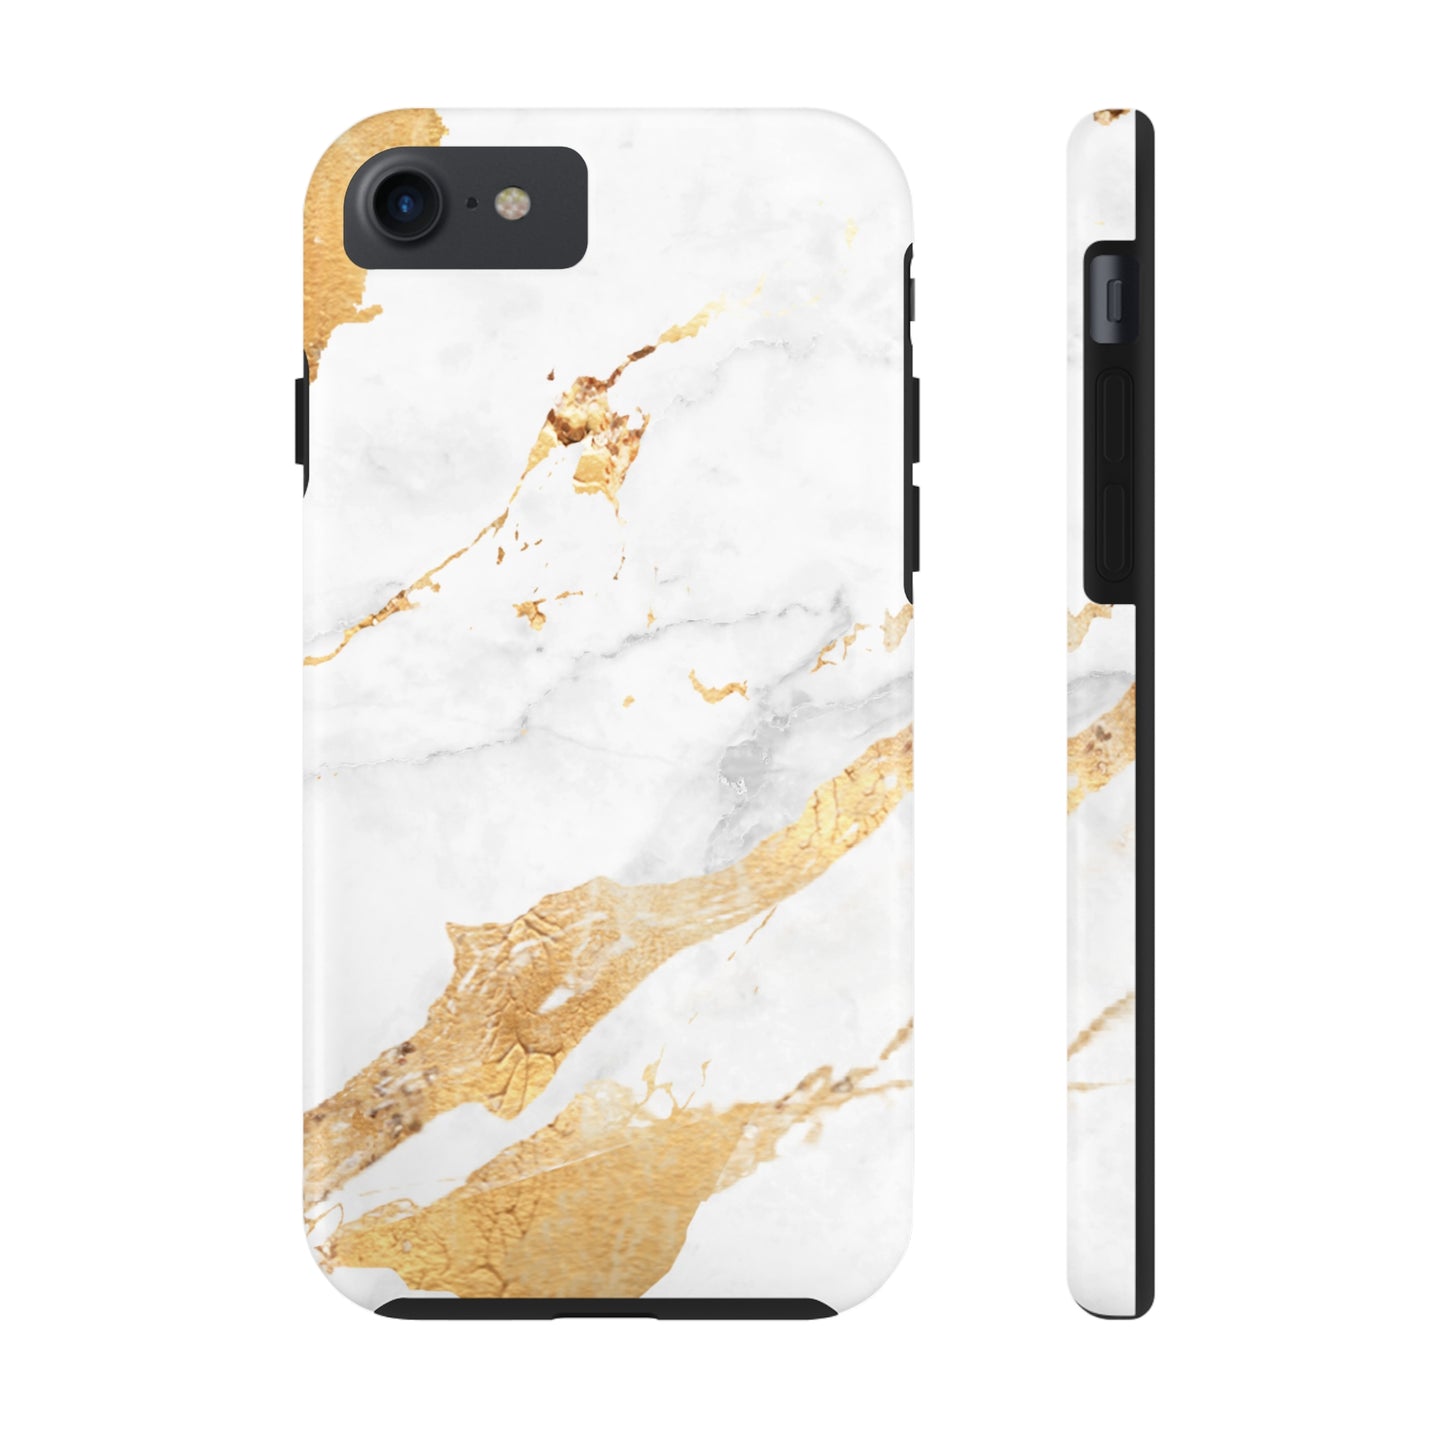 Marble Gold Design Tough Phone Cases